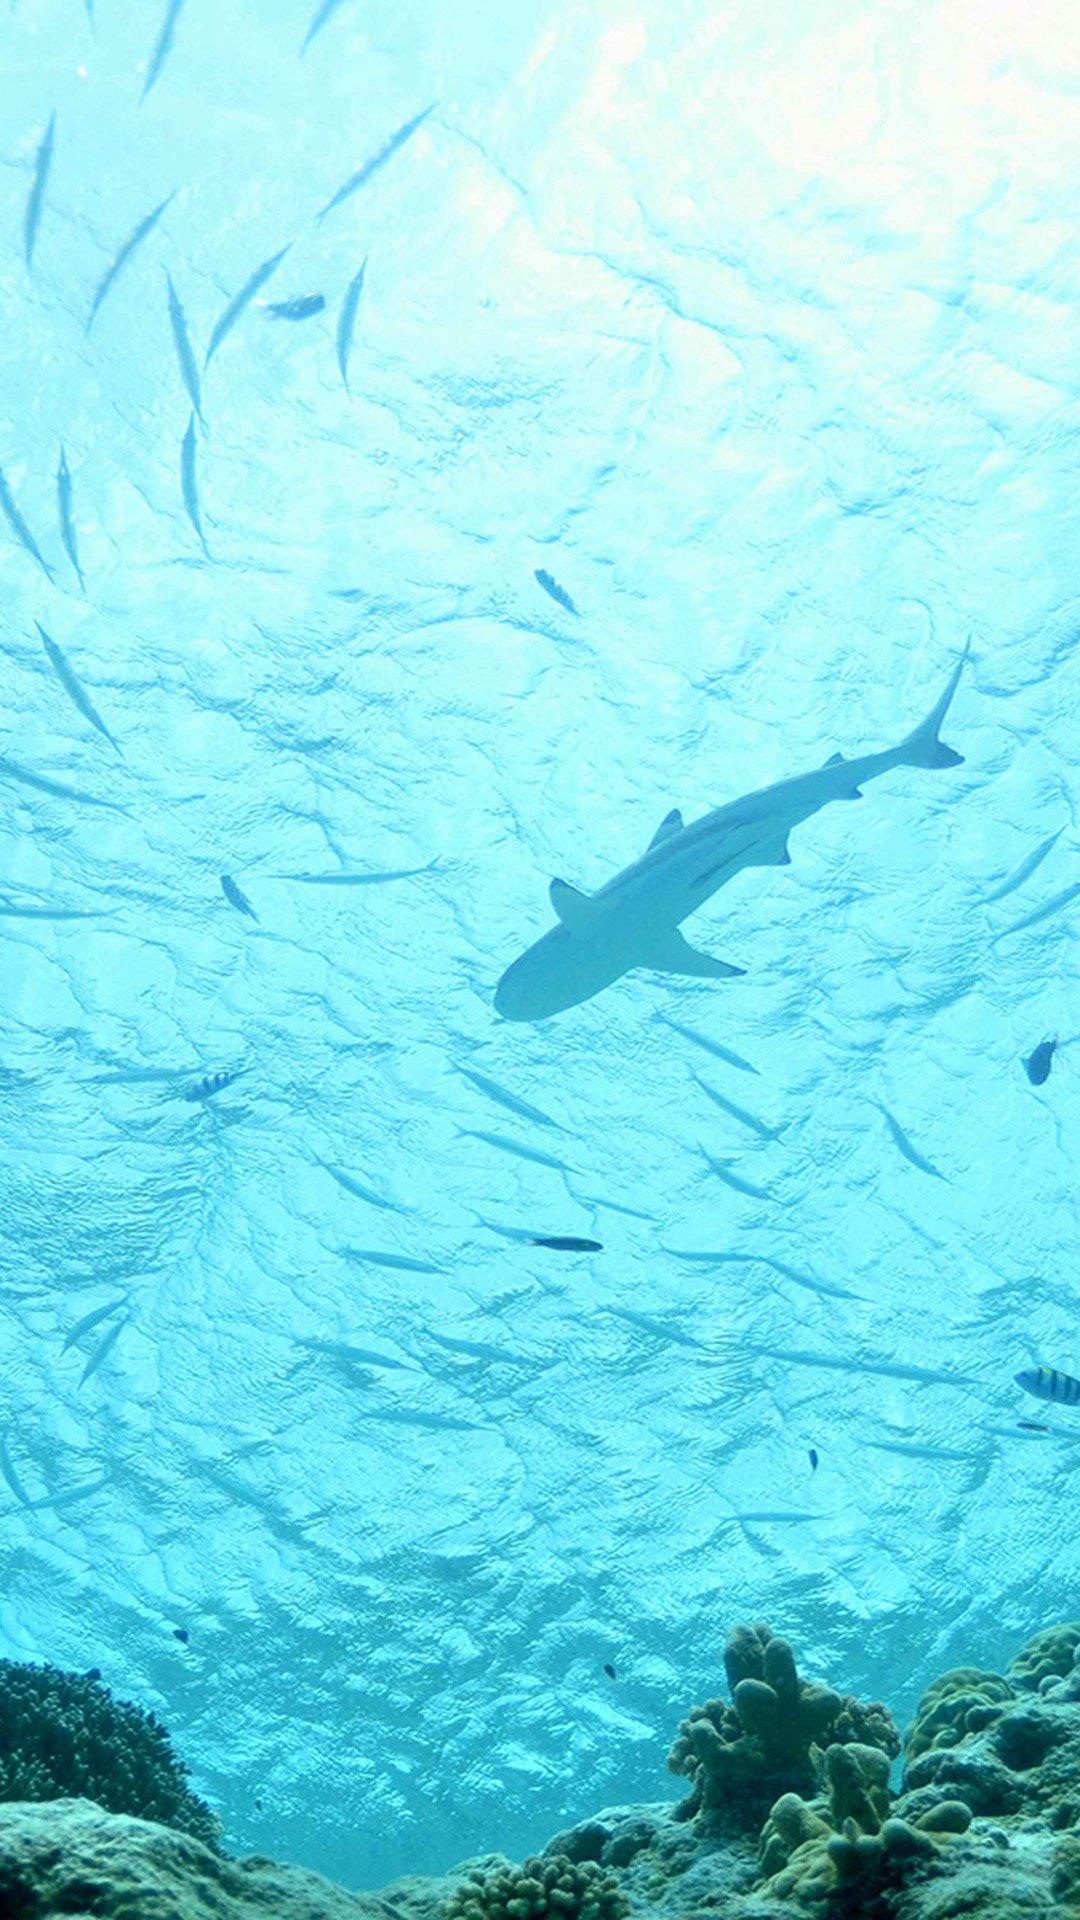 Free download Sea sharks Wallpaper for iPhone 6 Plus iPhone 6 Plus Wallpaper [1080x1920] for your Desktop, Mobile & Tablet. Explore iPhone Shark Wallpaper. Shark Wallpaper, San Jose Sharks